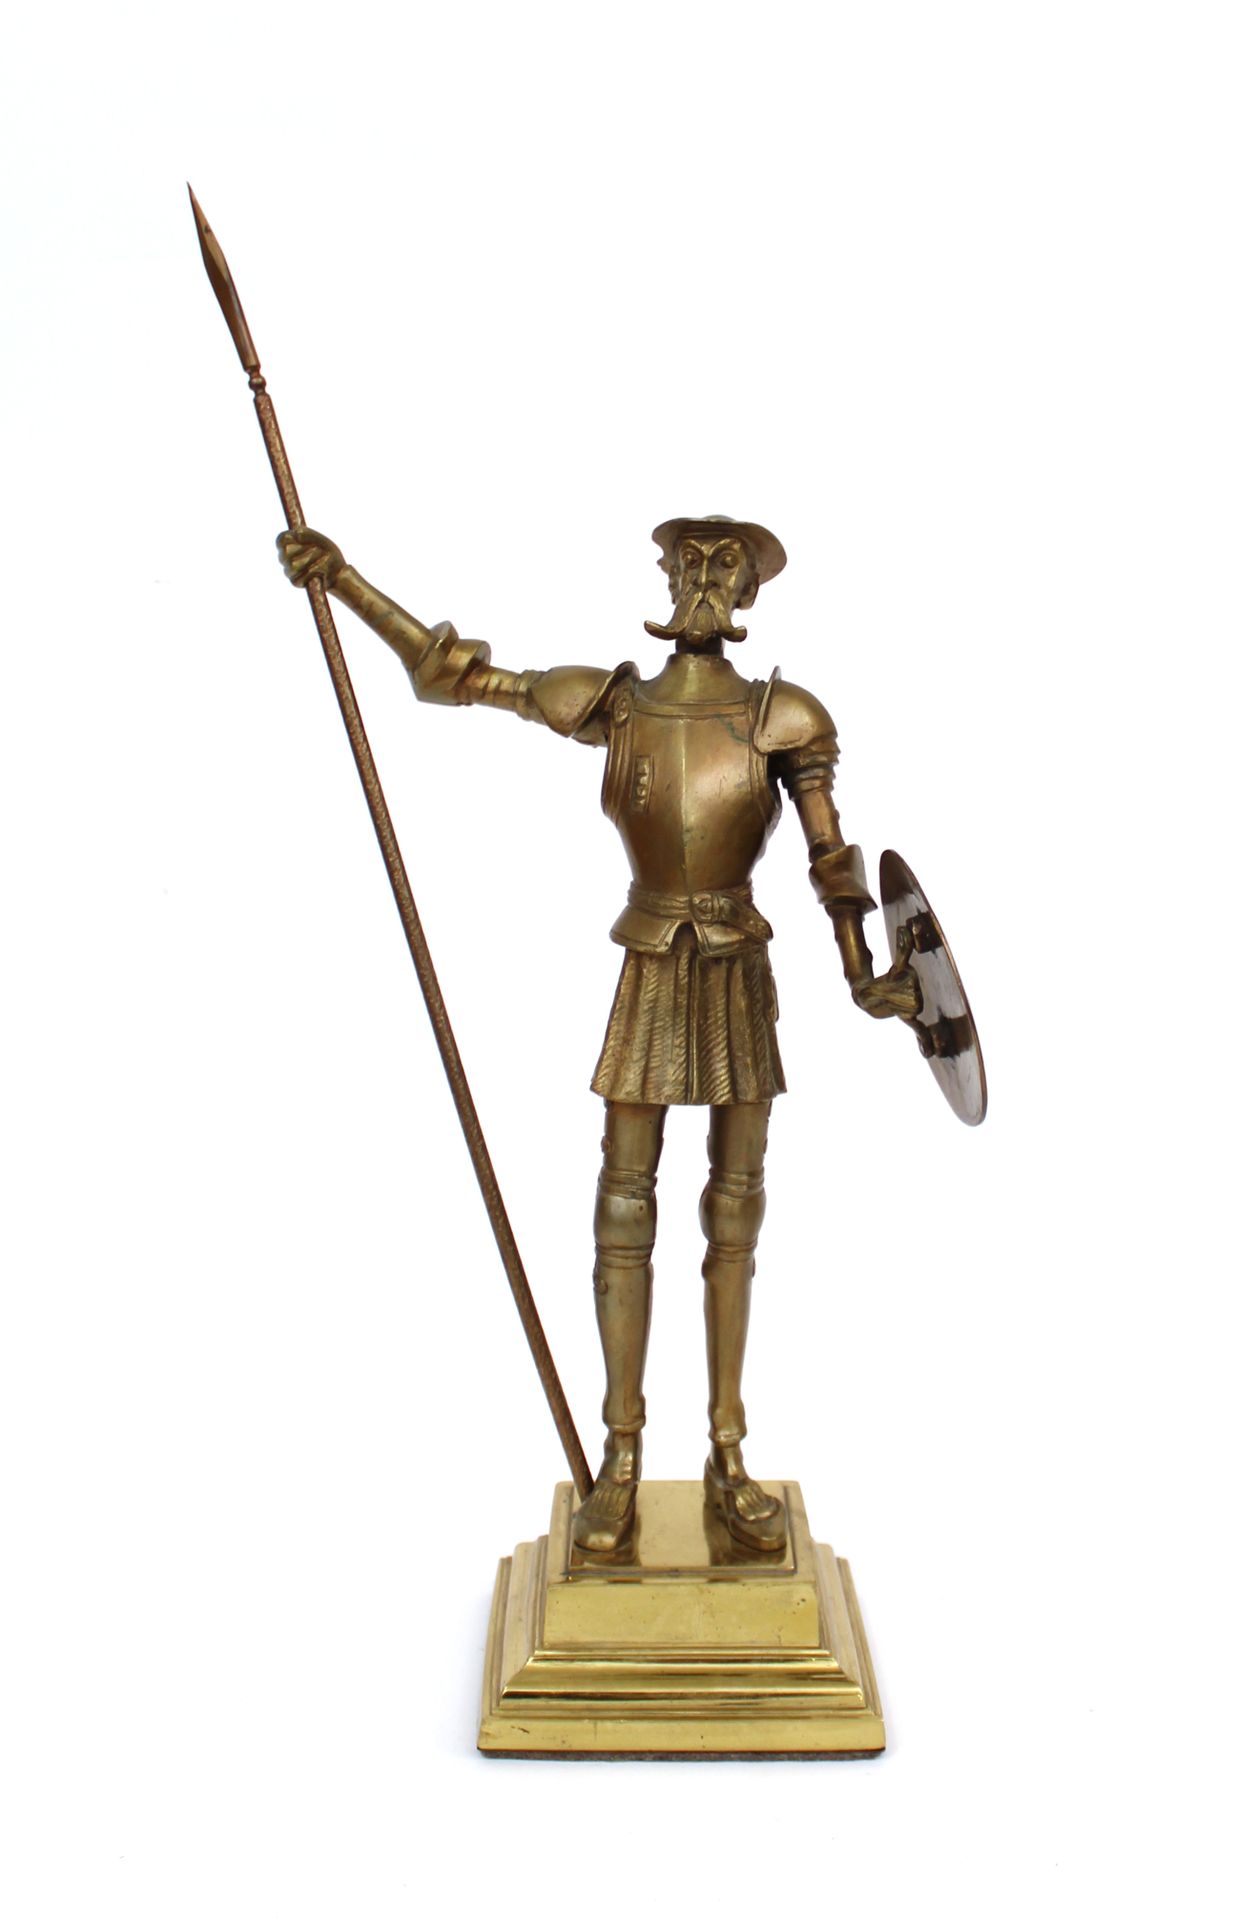 Null Escuela del siglo XX
Don Quijote
Bronce con pátina dorada
H. 47,5 cm